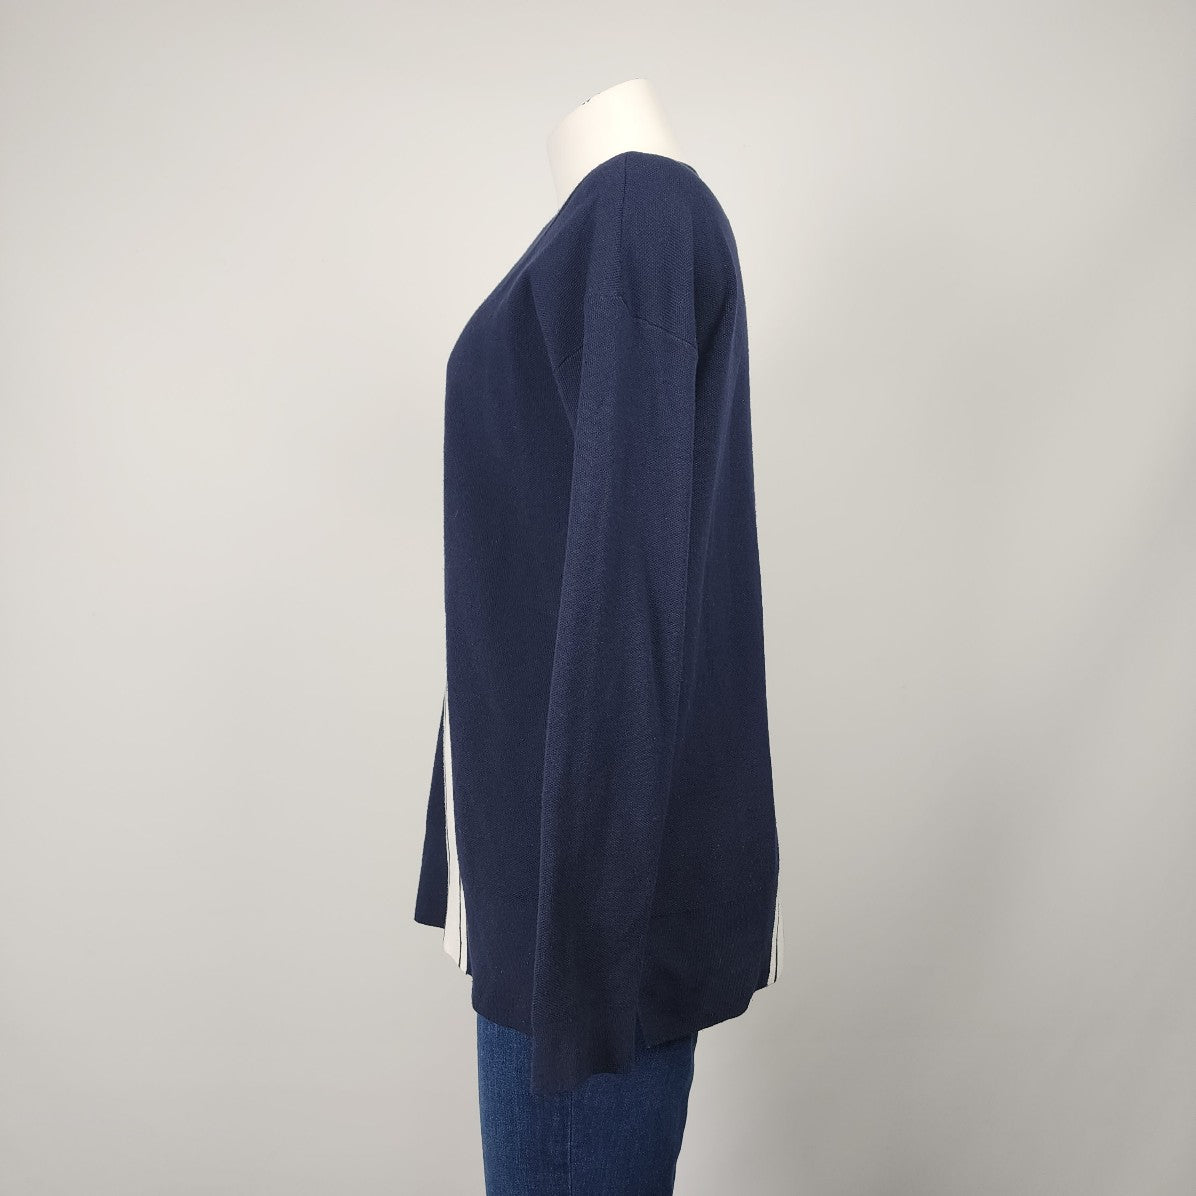 Athleta Navy Blue Cotton Knit Sweater Size S/M